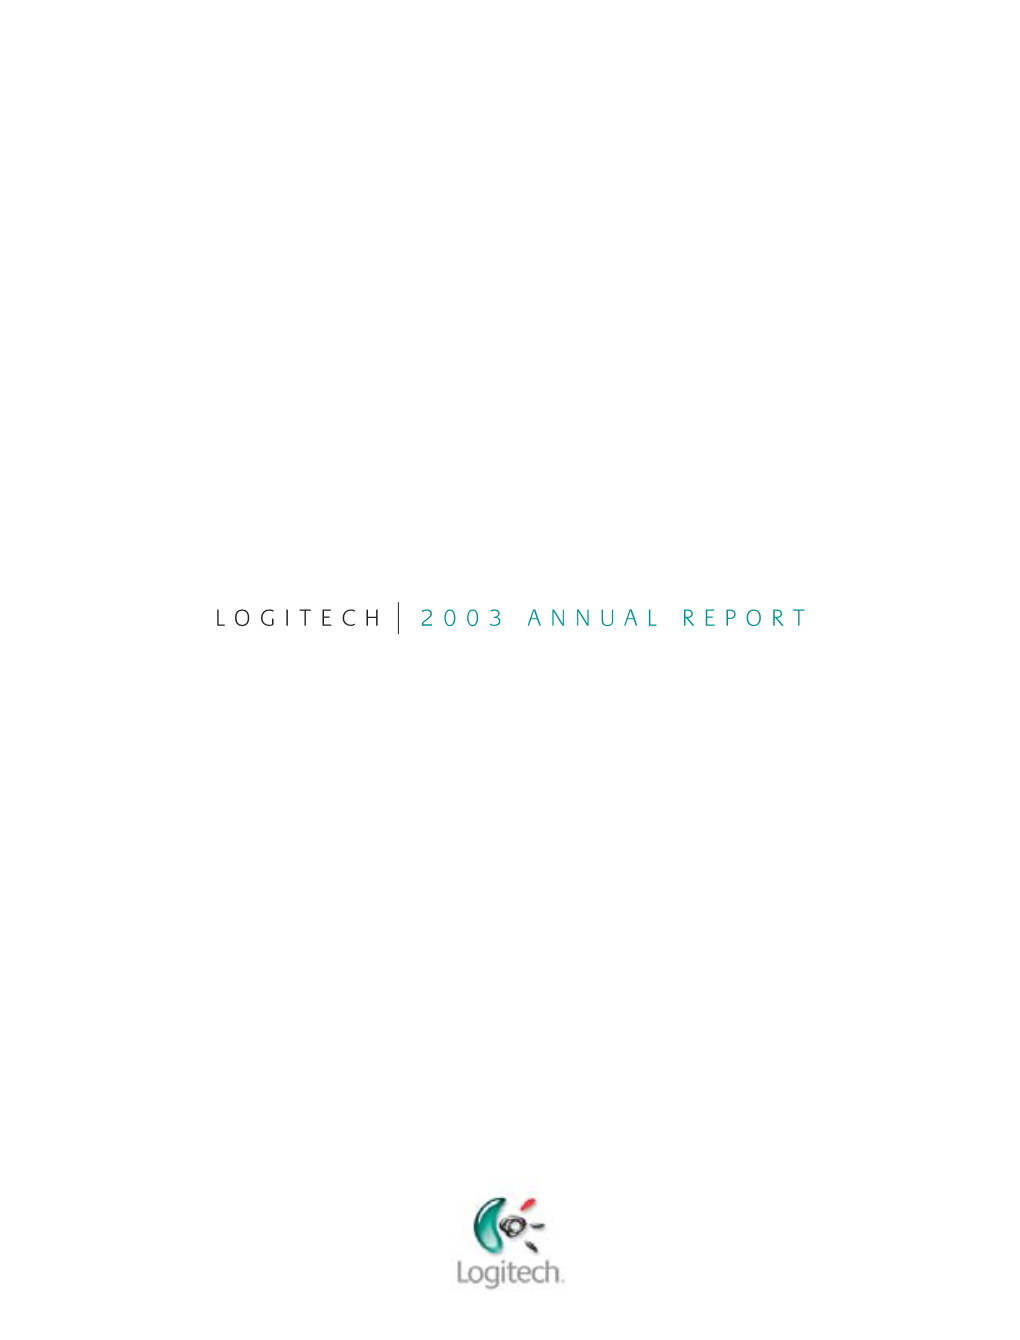 Logitech 2003 Annual Report